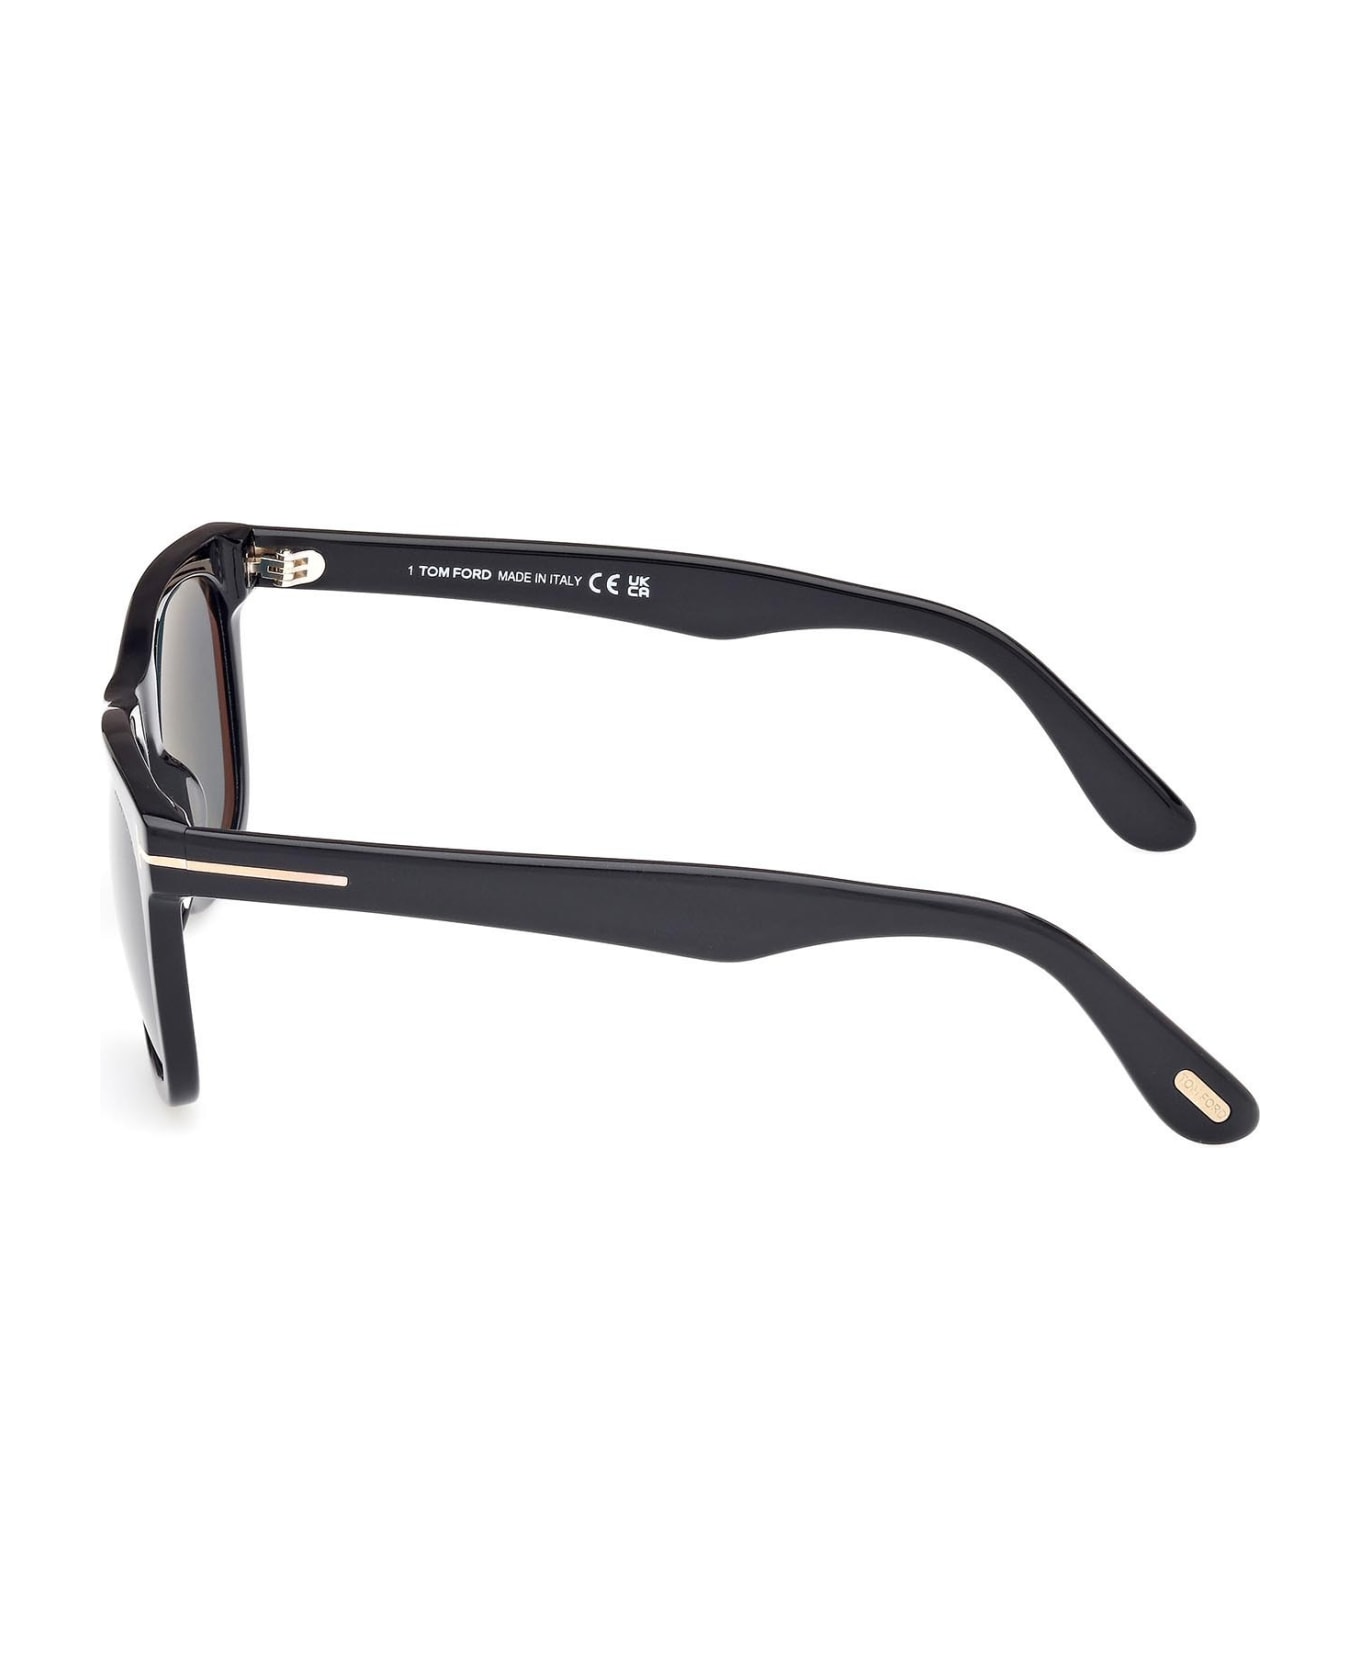 Tom Ford Eyewear Sunglasses - Nero/Blu